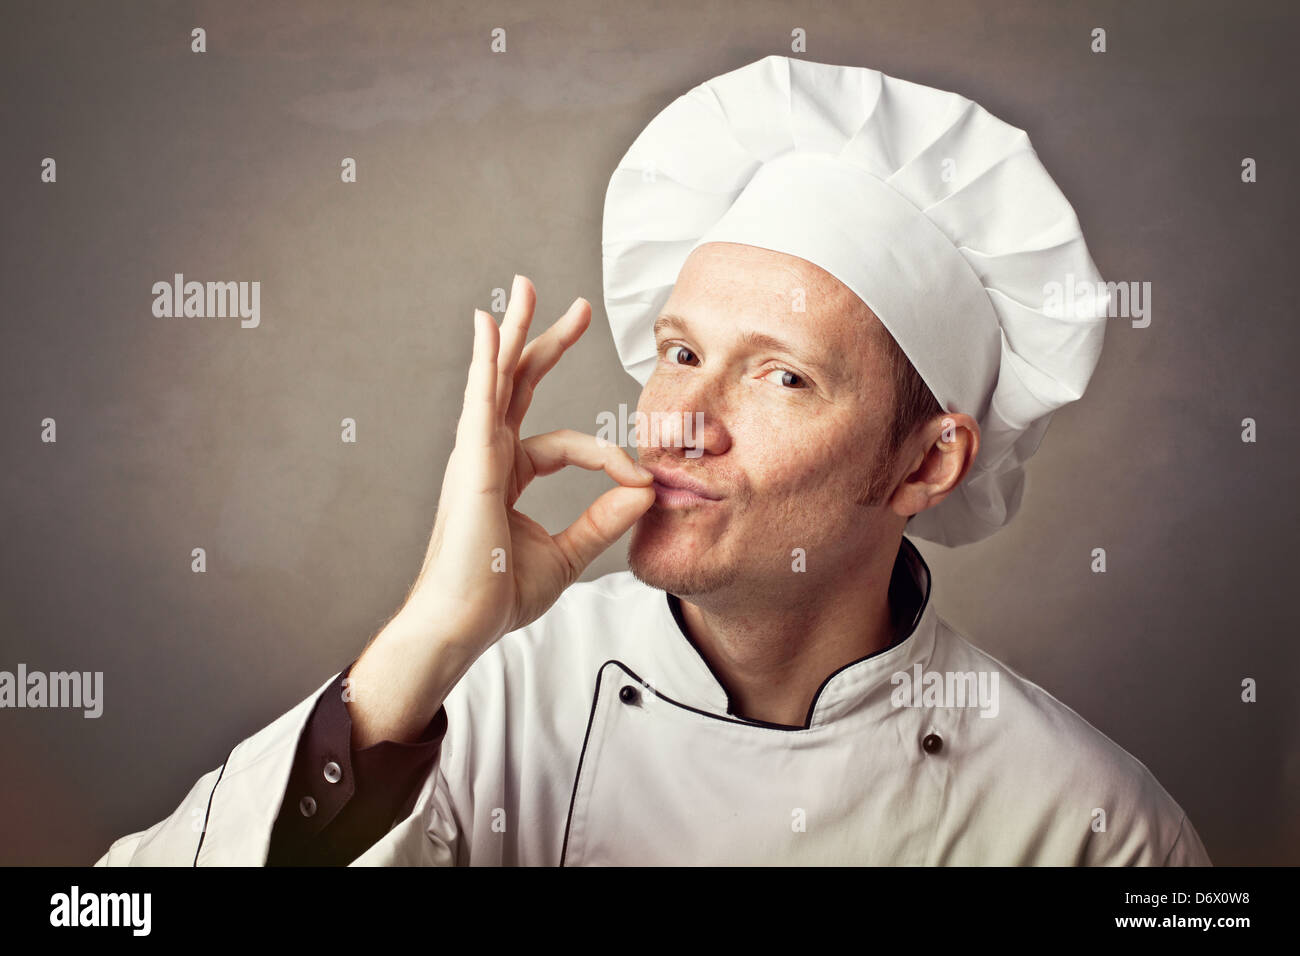 portrait of caucasian man with chef uniform Stock Photo